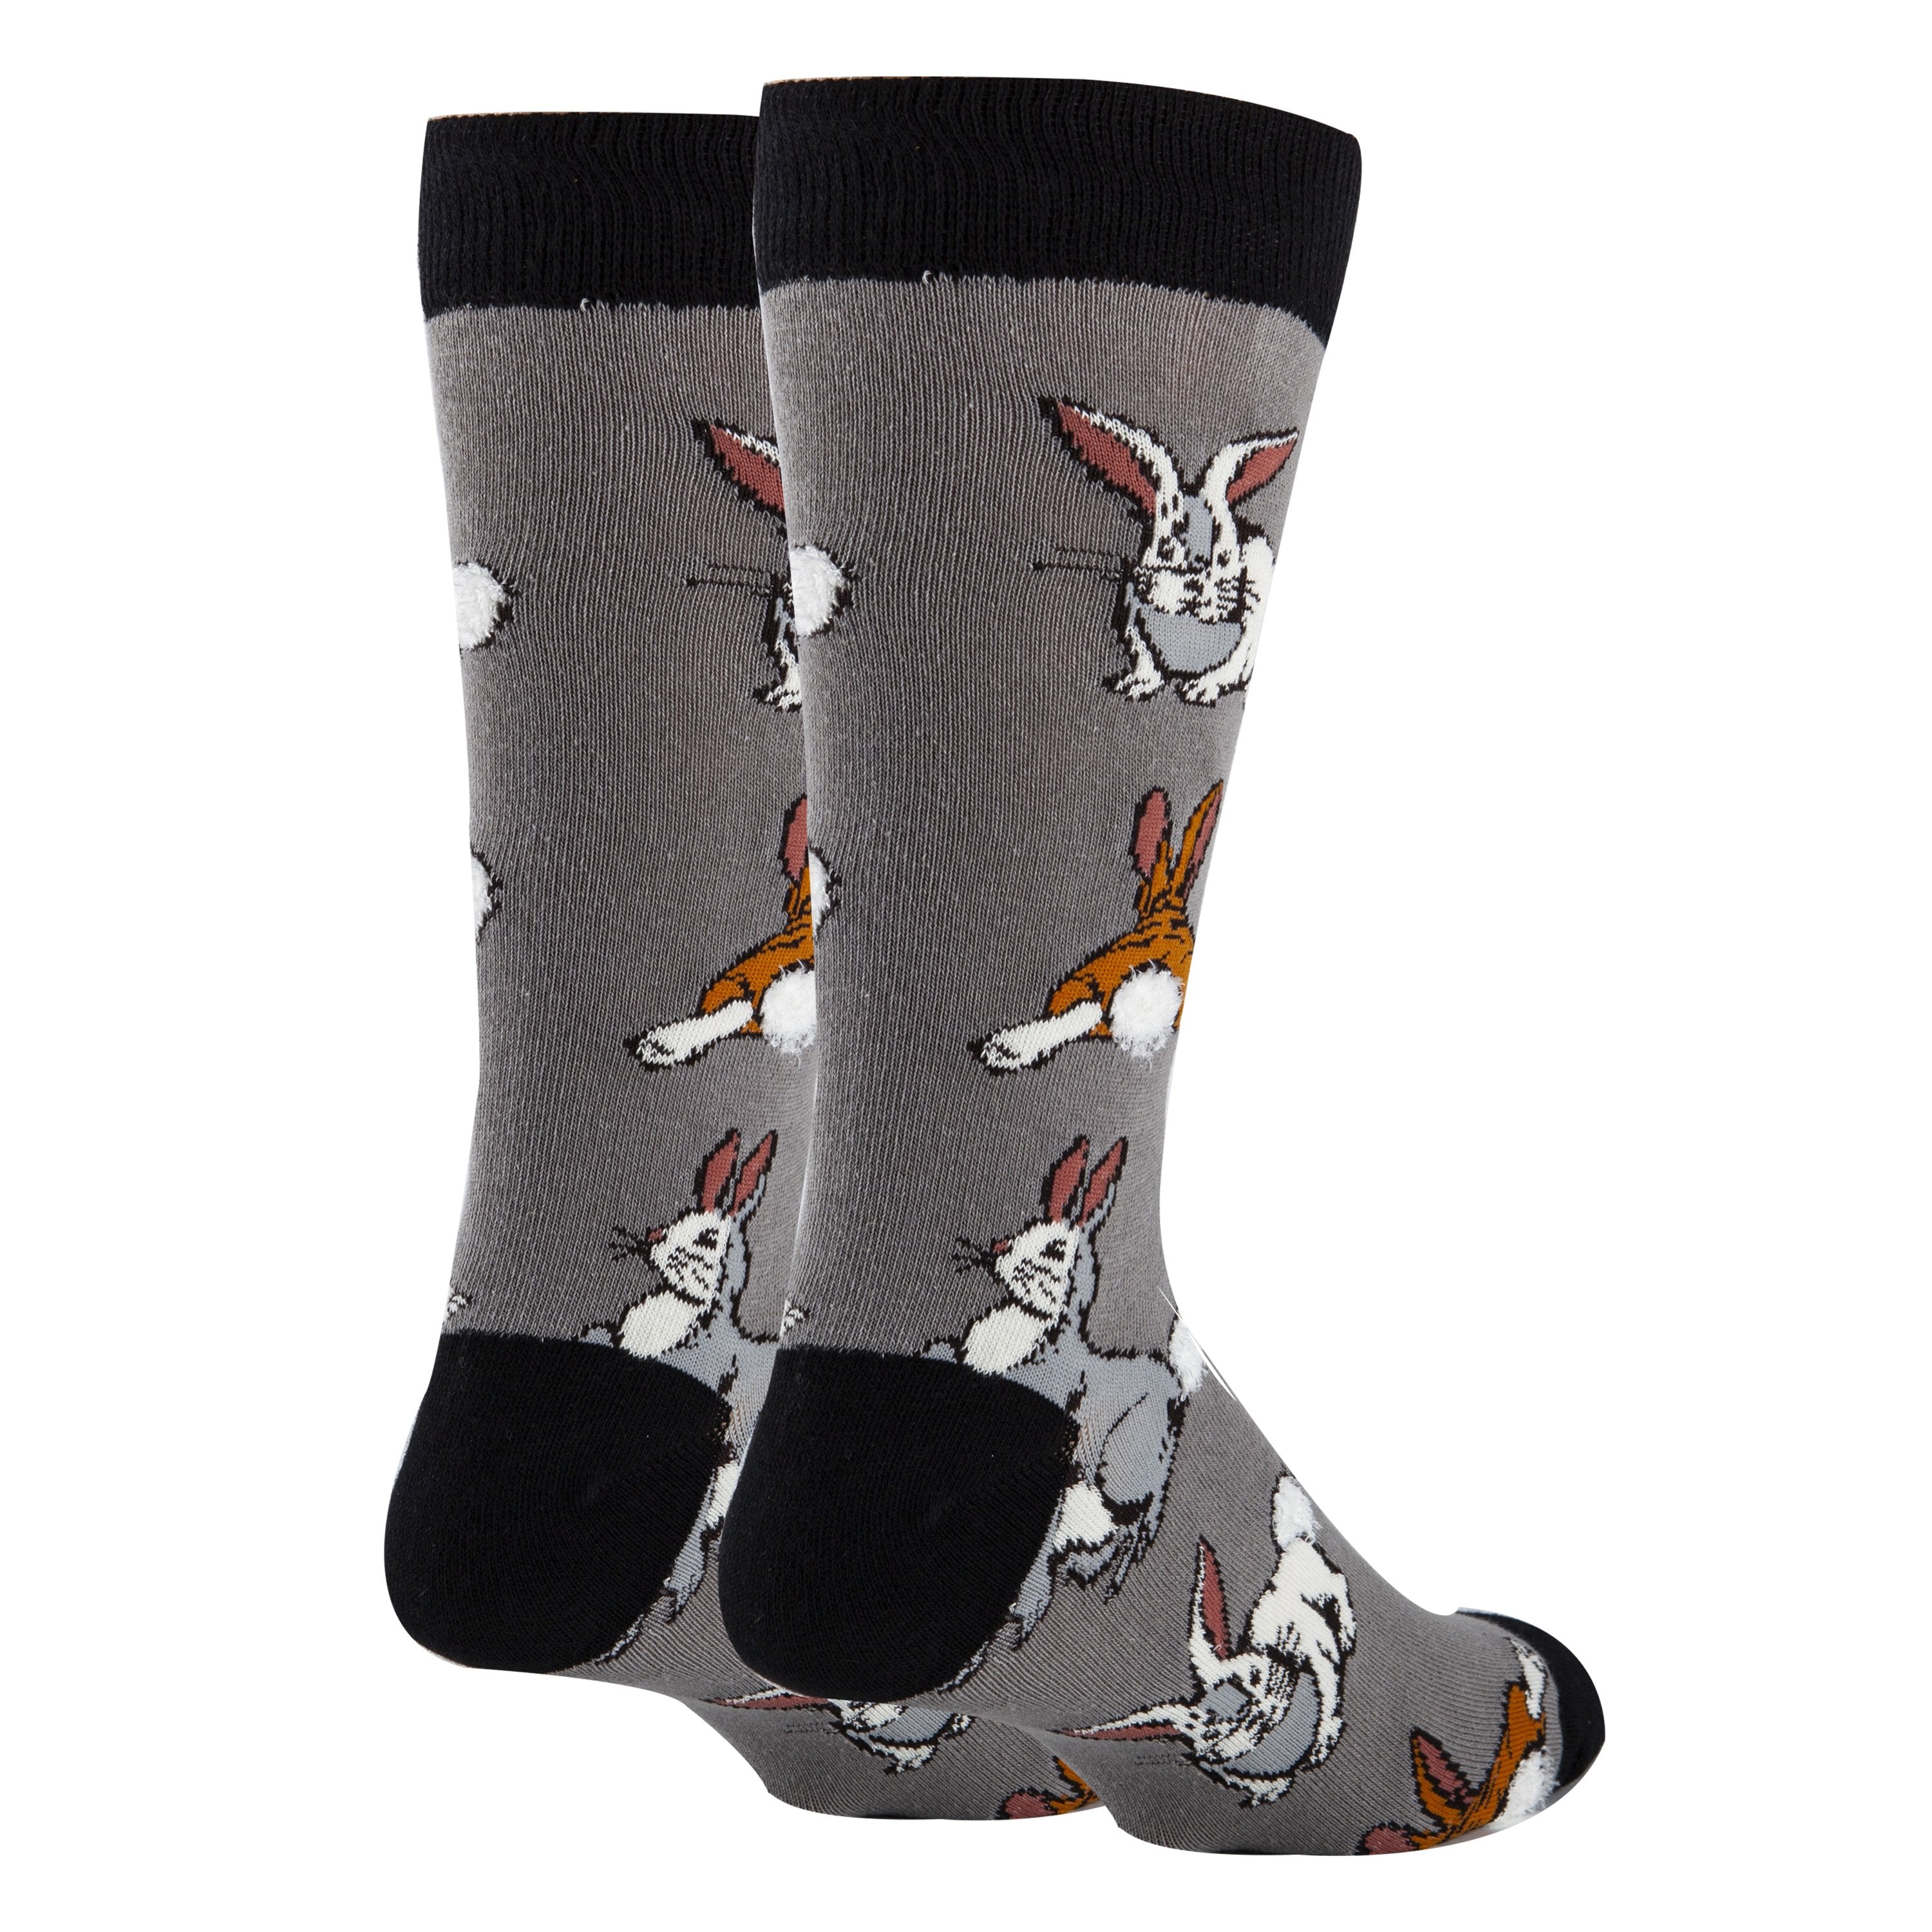 bunny-hop-mens-crew-socks-2-oooh-yeah-socks